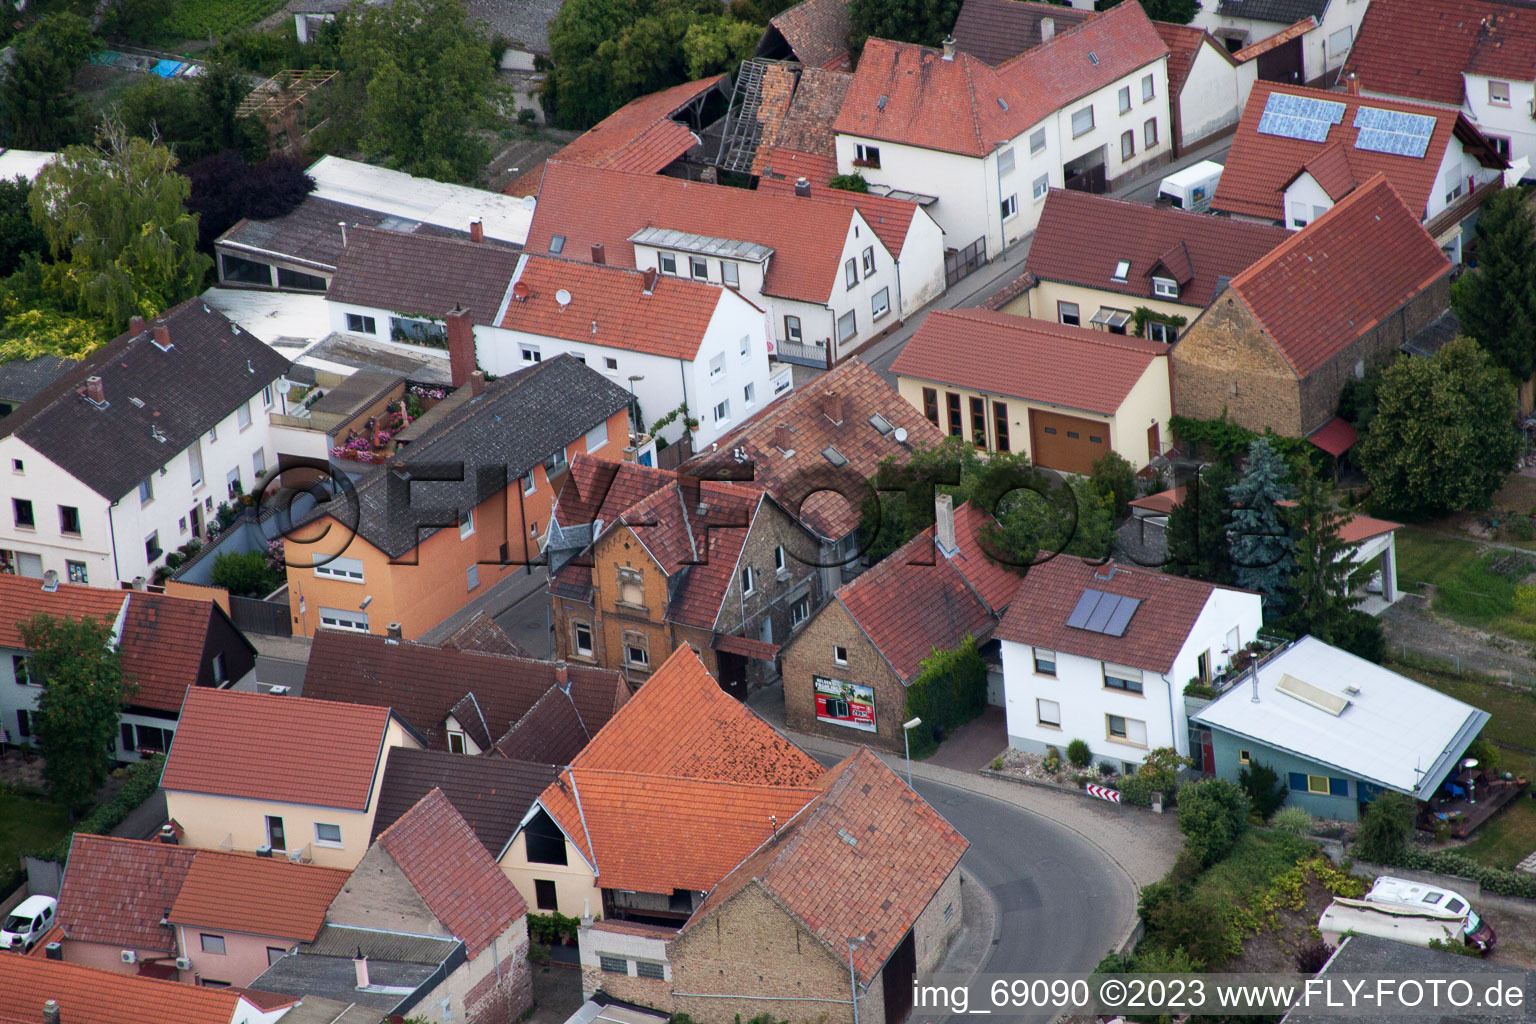 District Bobenheim in Bobenheim-Roxheim in the state Rhineland-Palatinate, Germany seen from above